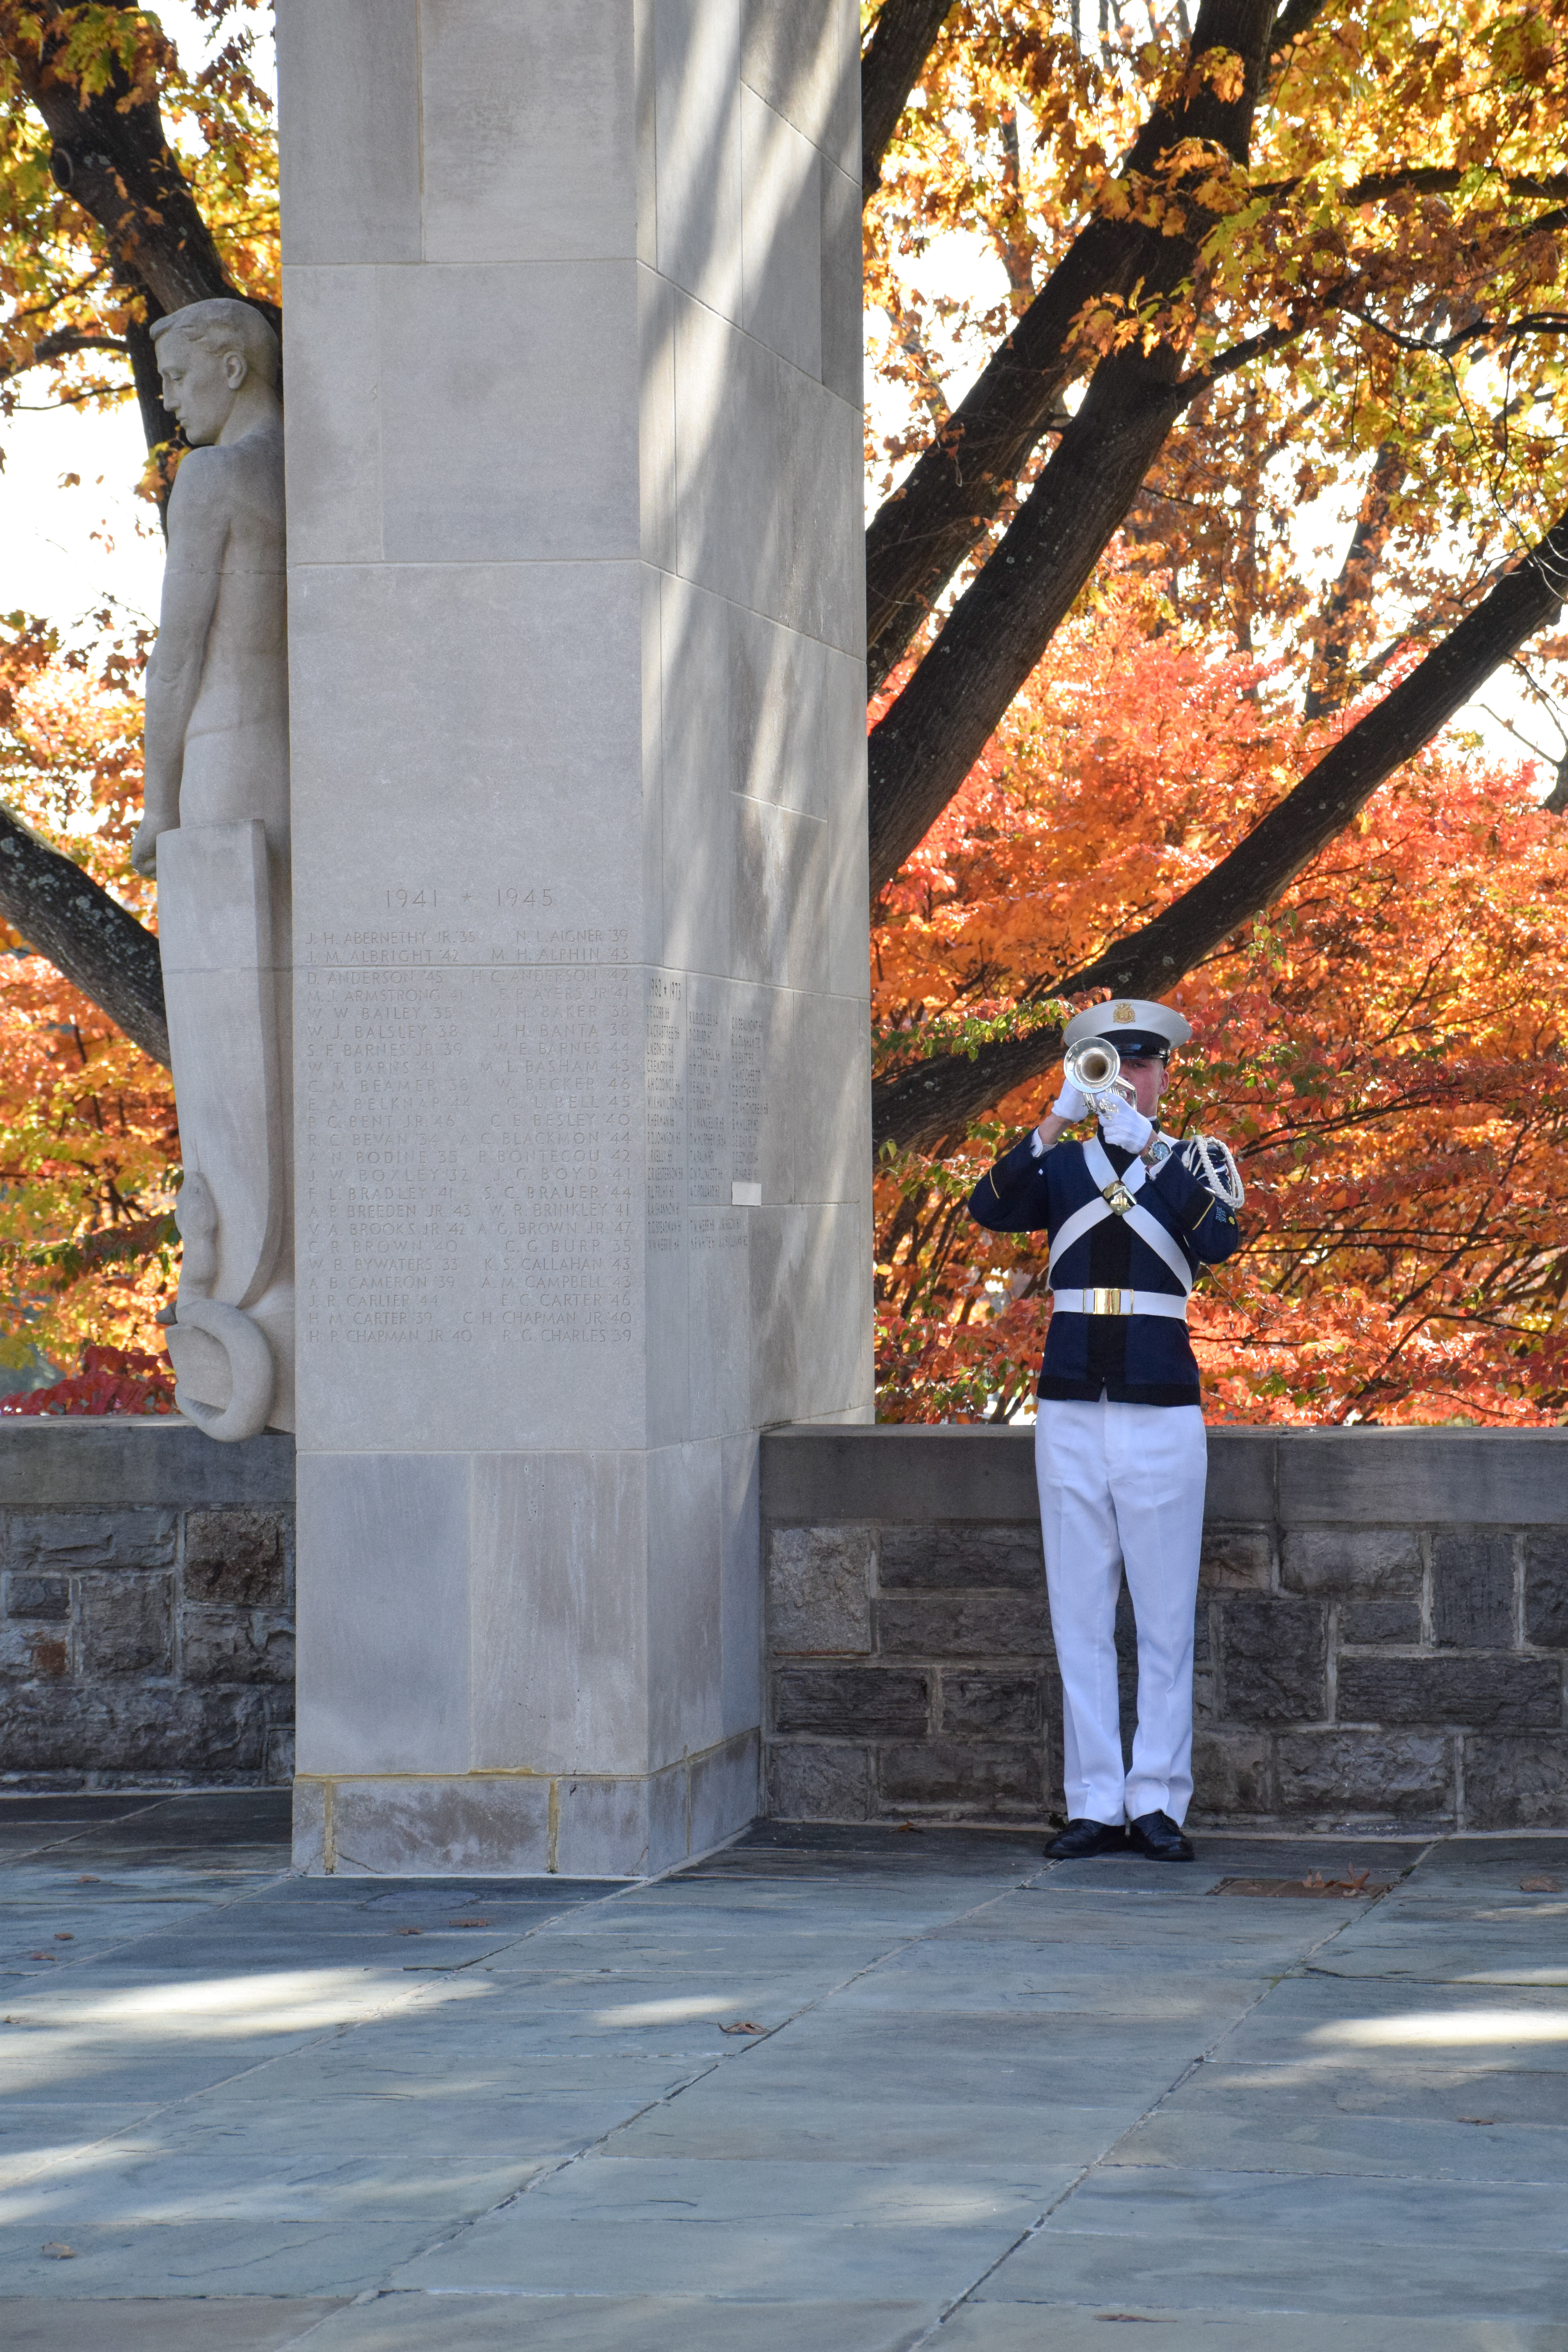 cadet with bugle at pylon